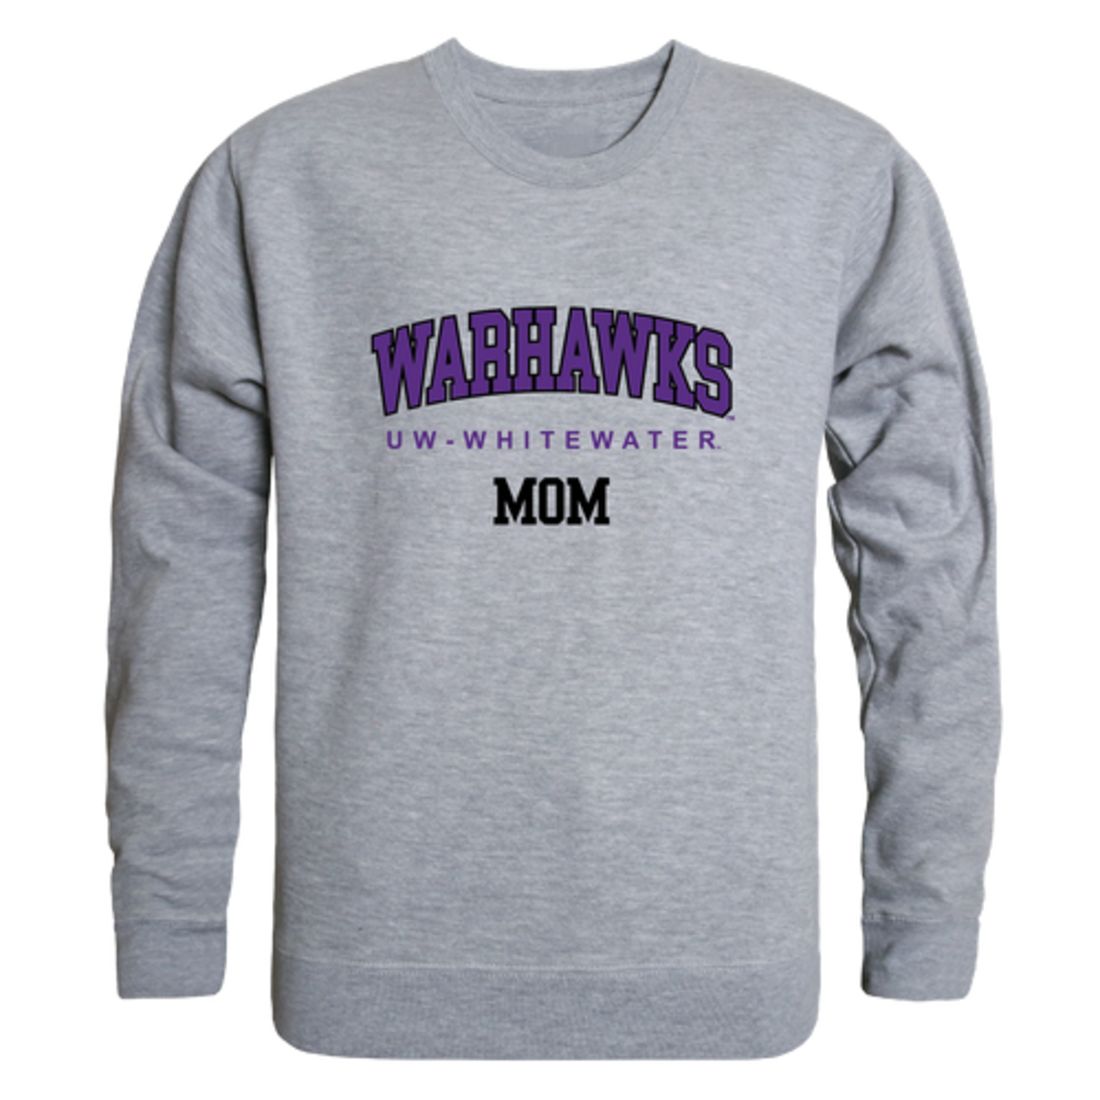 UWW University of Wisconsin Whitewater Warhawks Mom Fleece Crewneck Pullover Sweatshirt Heather Charcoal Small-Campus-Wardrobe